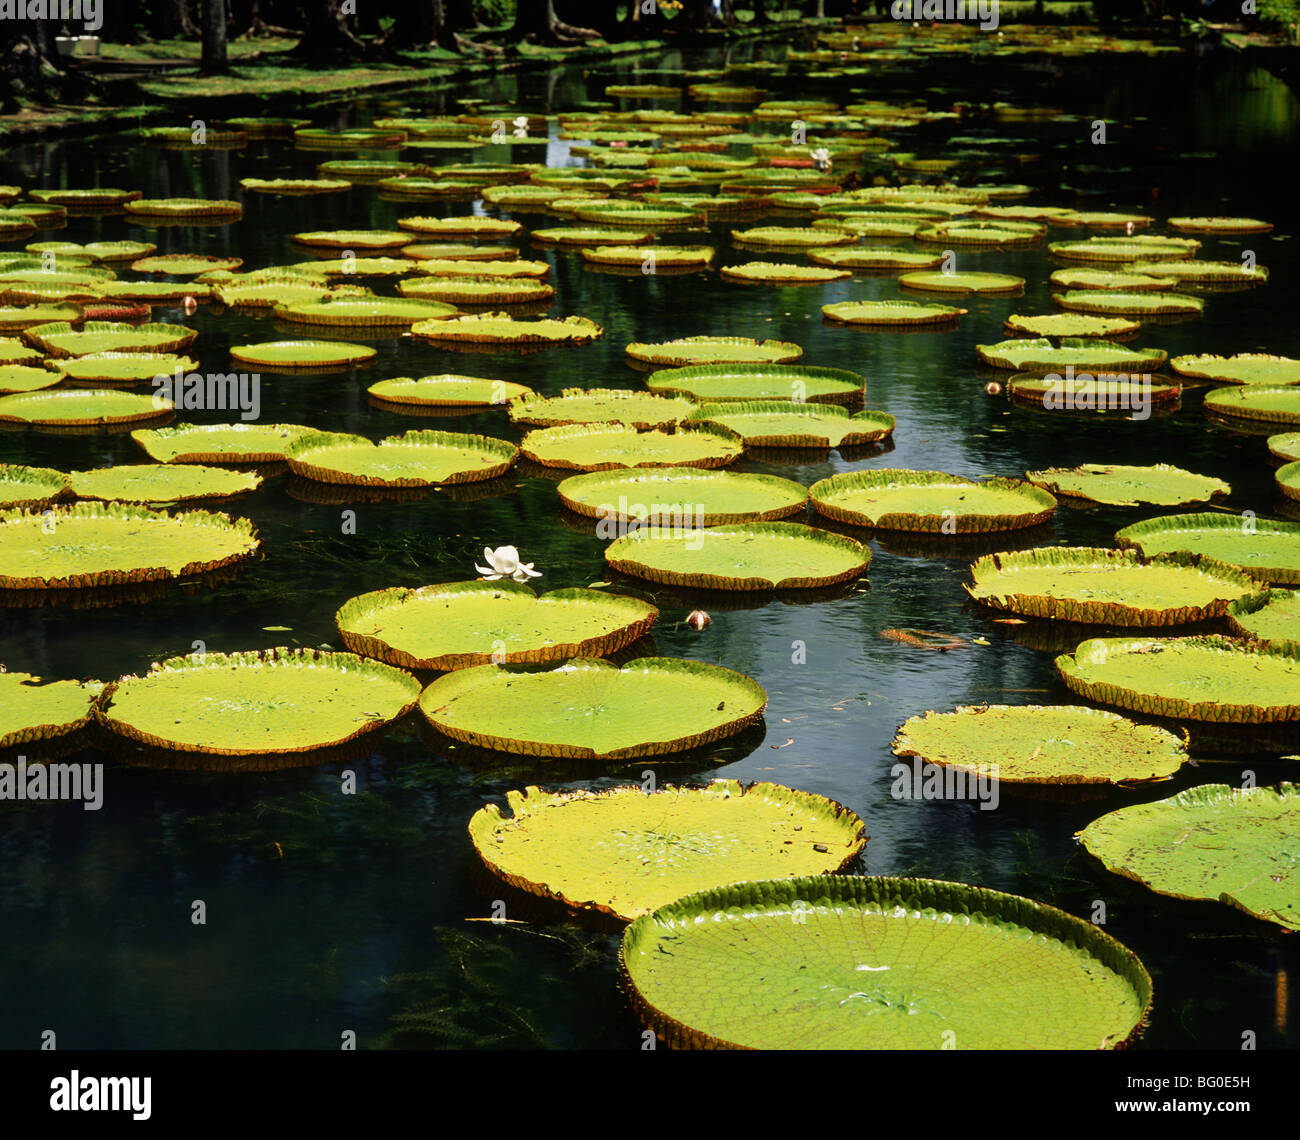 Victoria Regina Pond in the Pamplemousses Botanic Garden, Mauritius, Africa Stock Photo